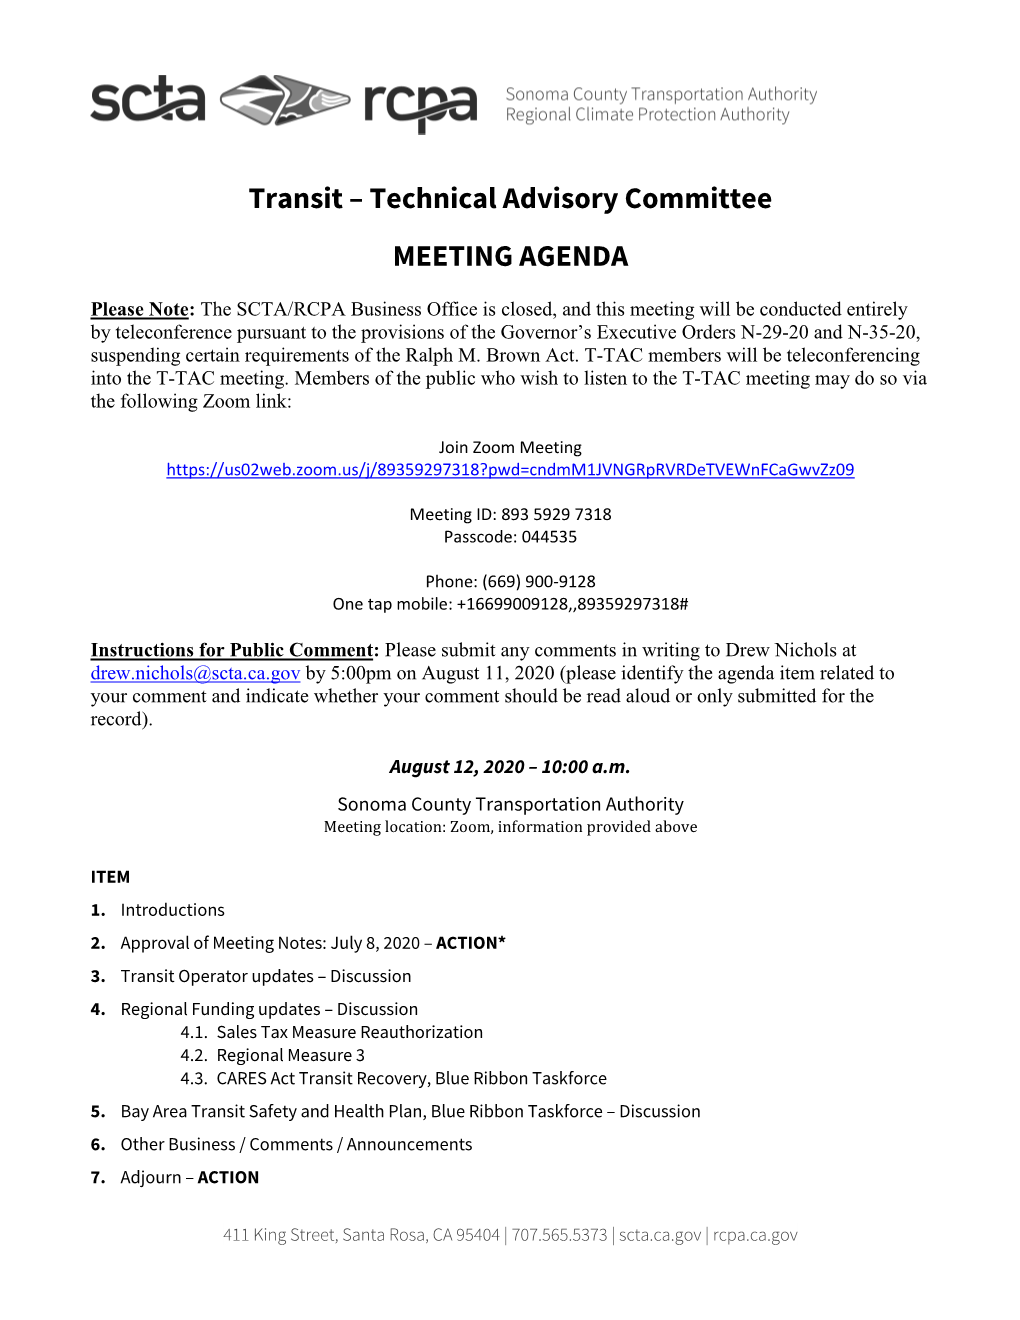 Transit – Technical Advisory Committee 8-12-2020